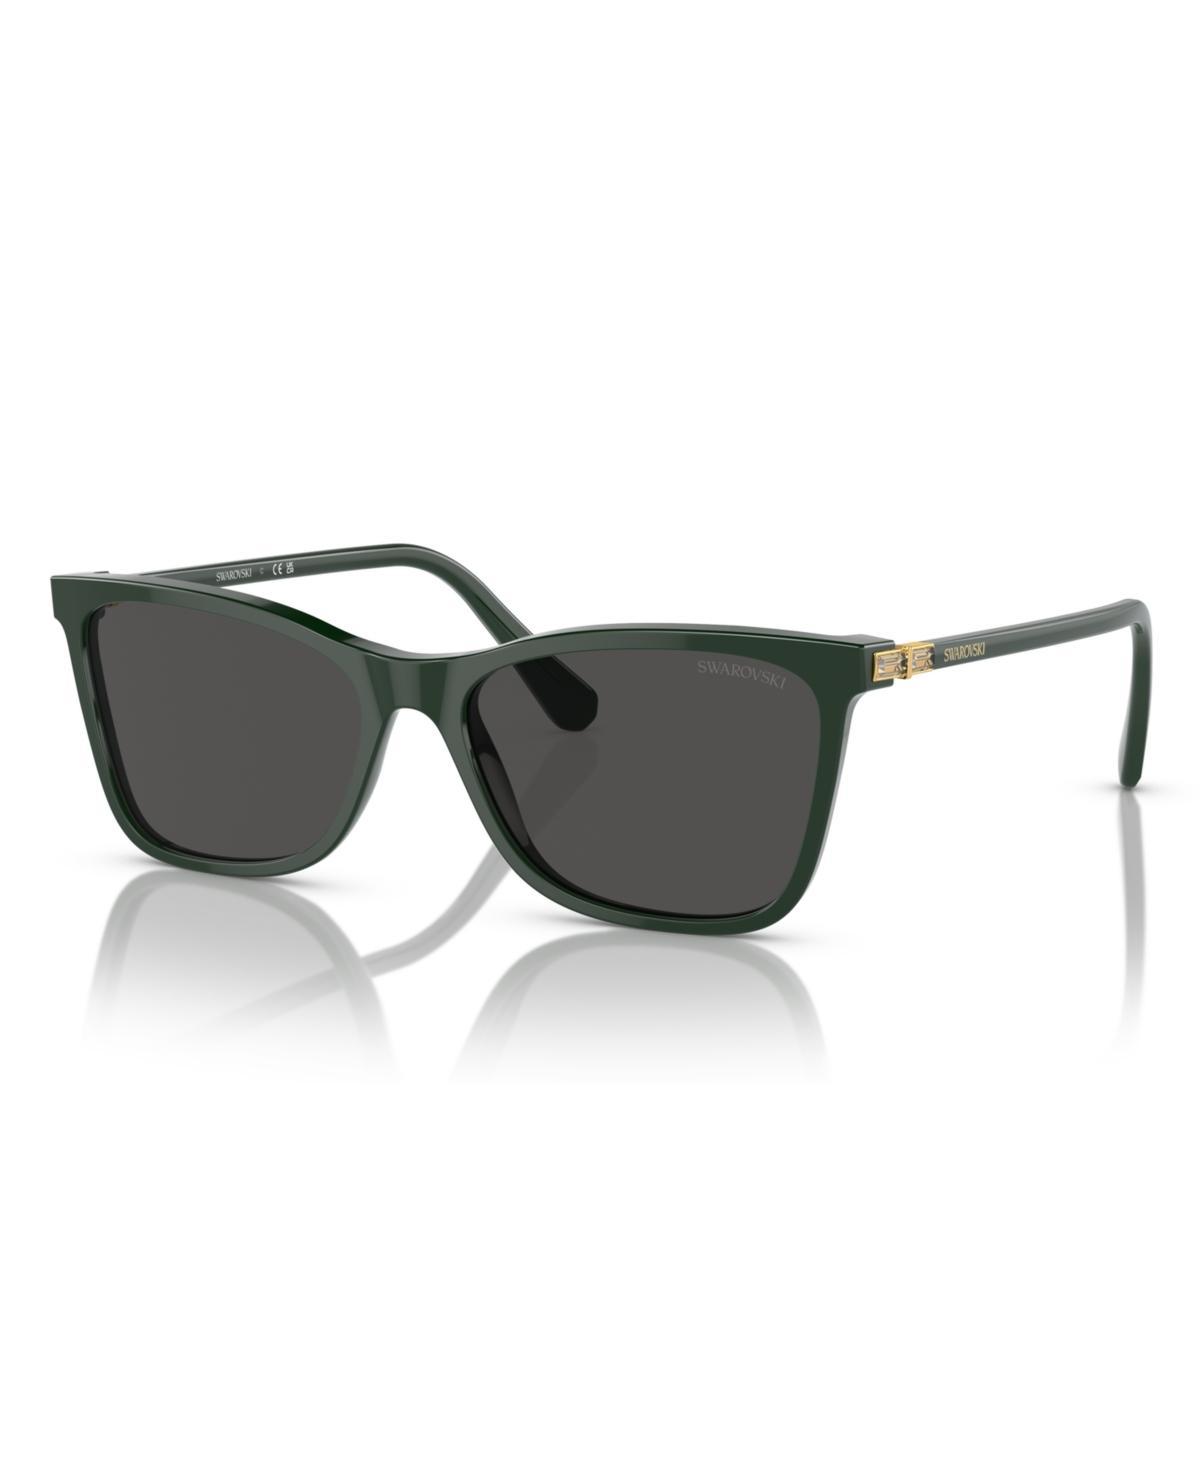 Swarovski 55mm Rectangular Sunglasses Product Image